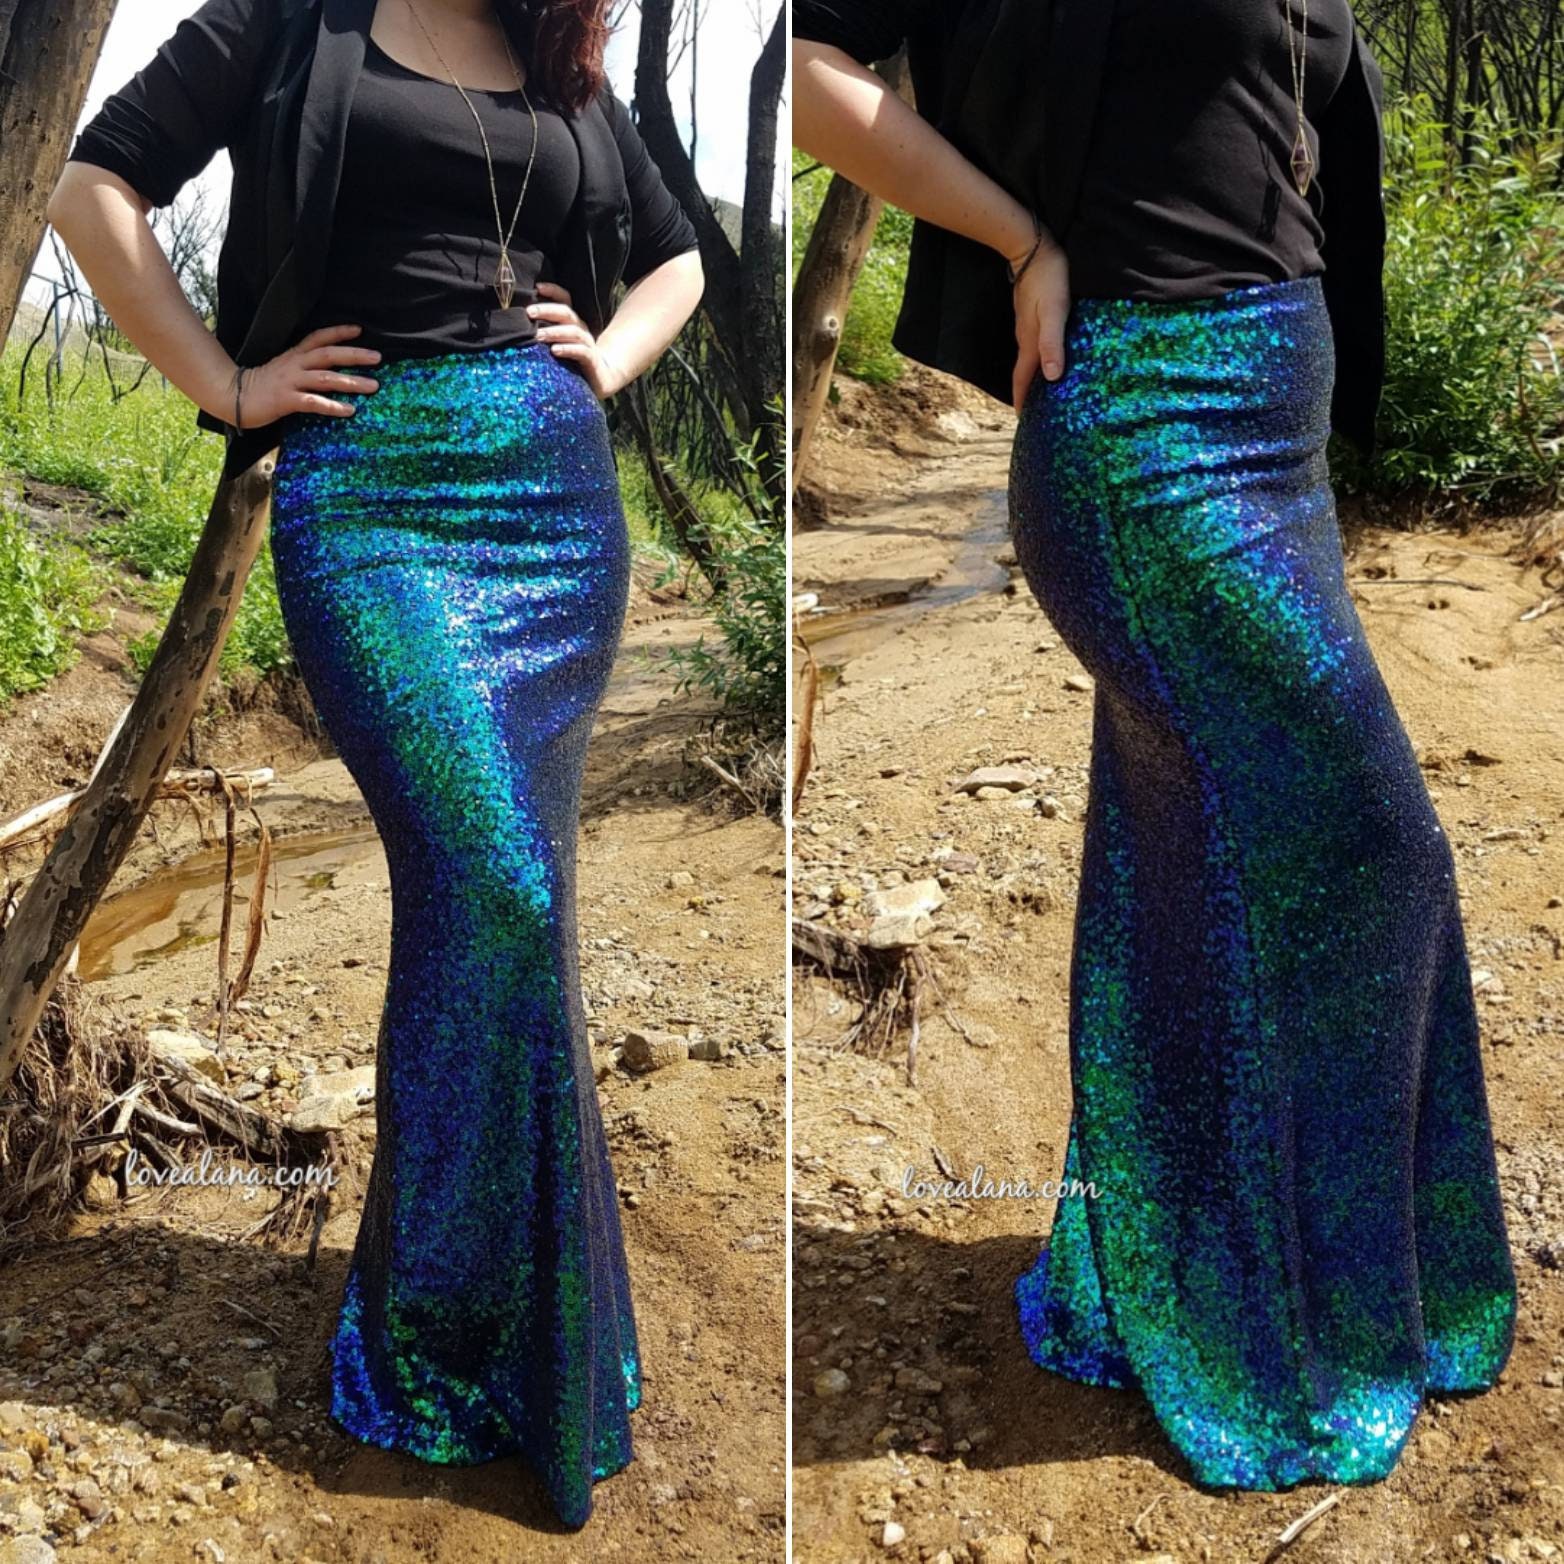 Sequins Sparkle Mermaid Top & Skirt Set